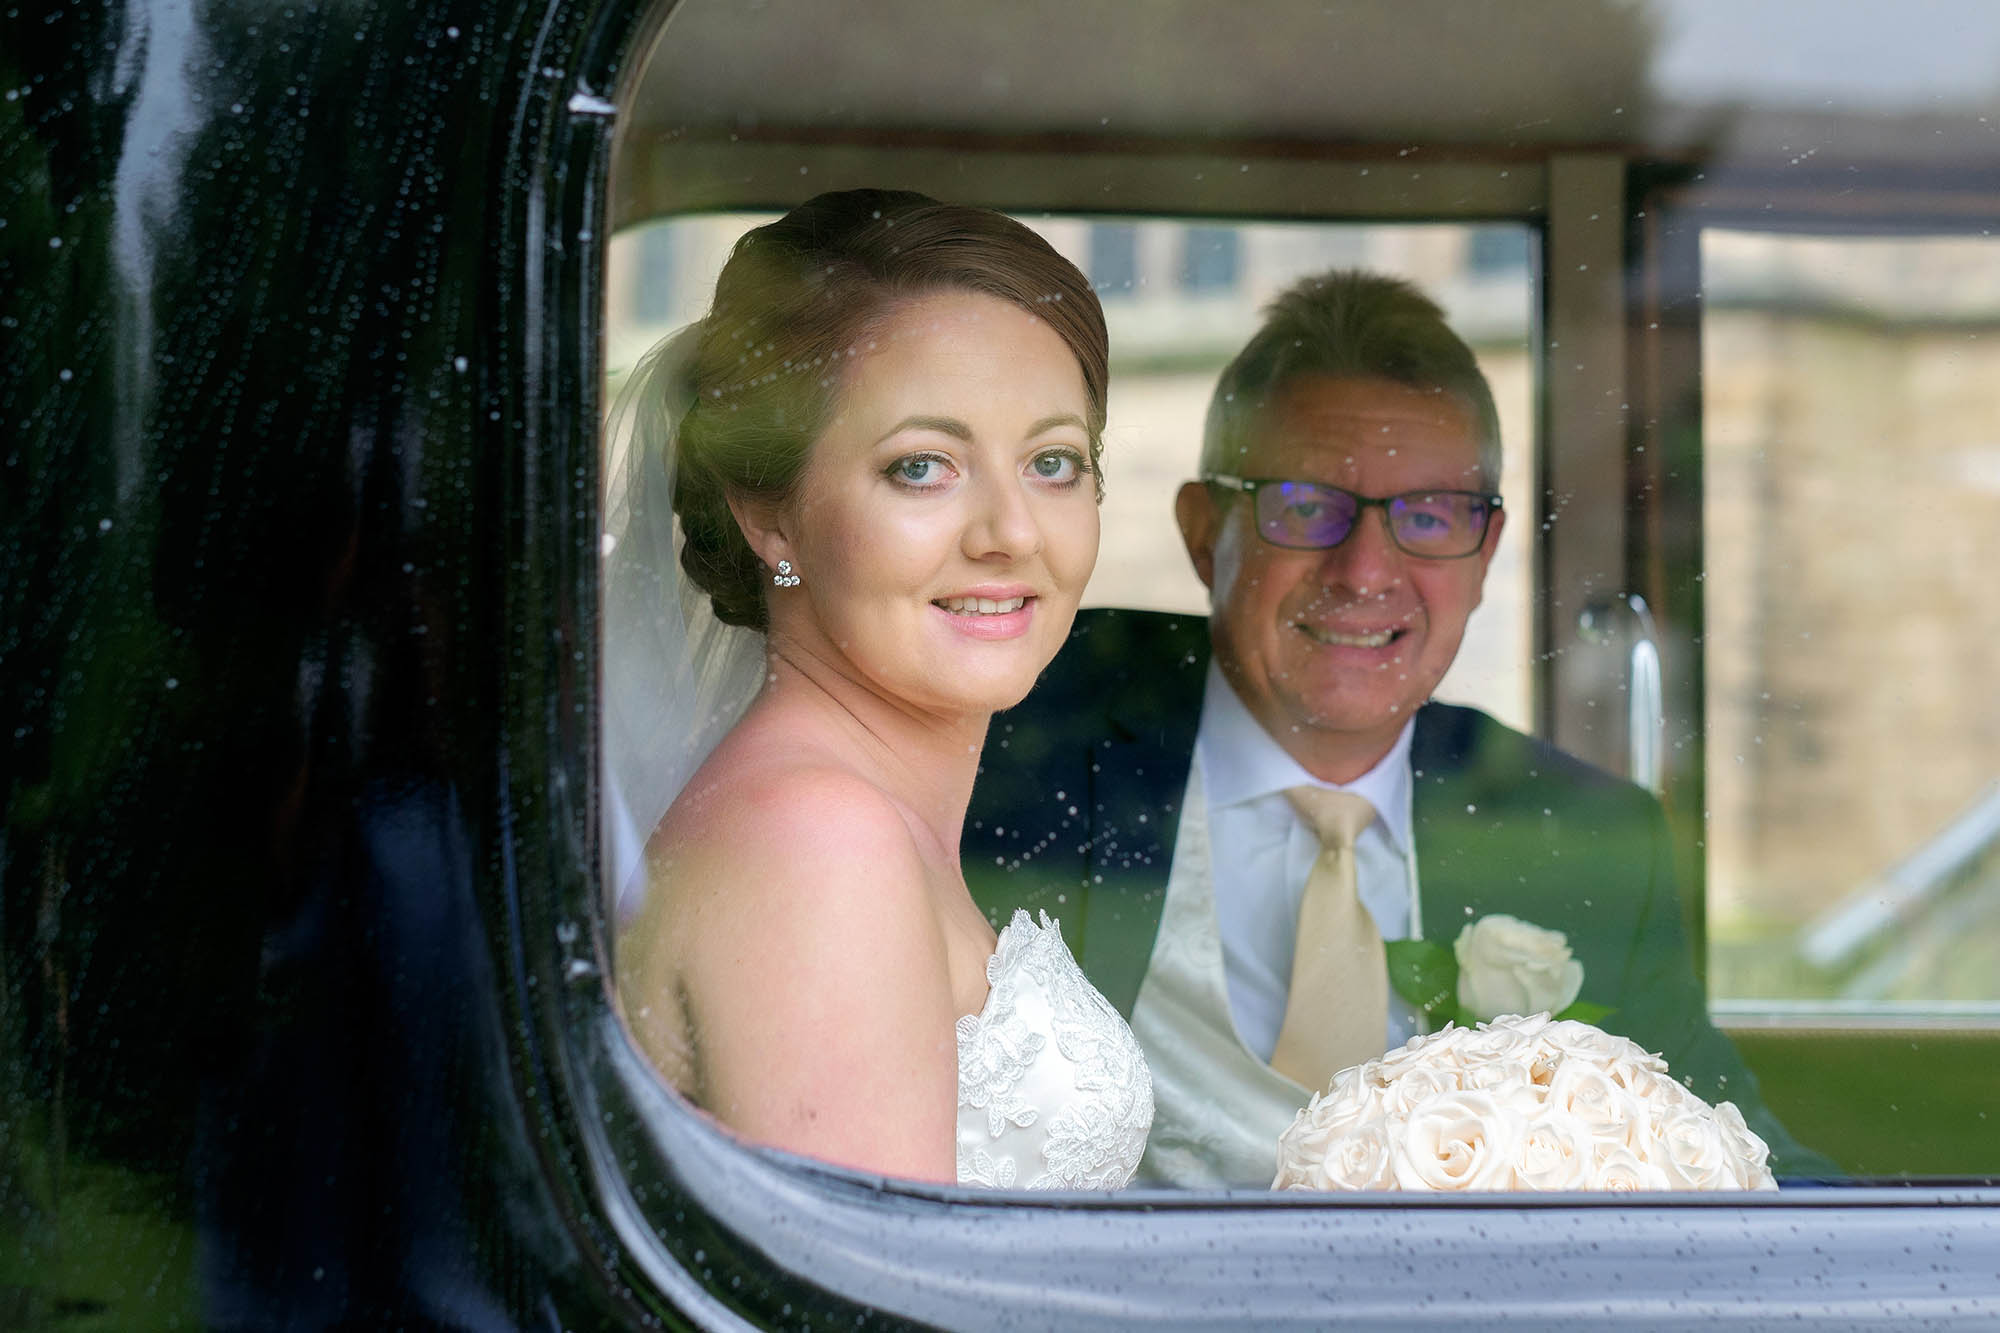 A bride and her dad in their vintage wedding car - Sheffield wedding photographer John Mottershaw